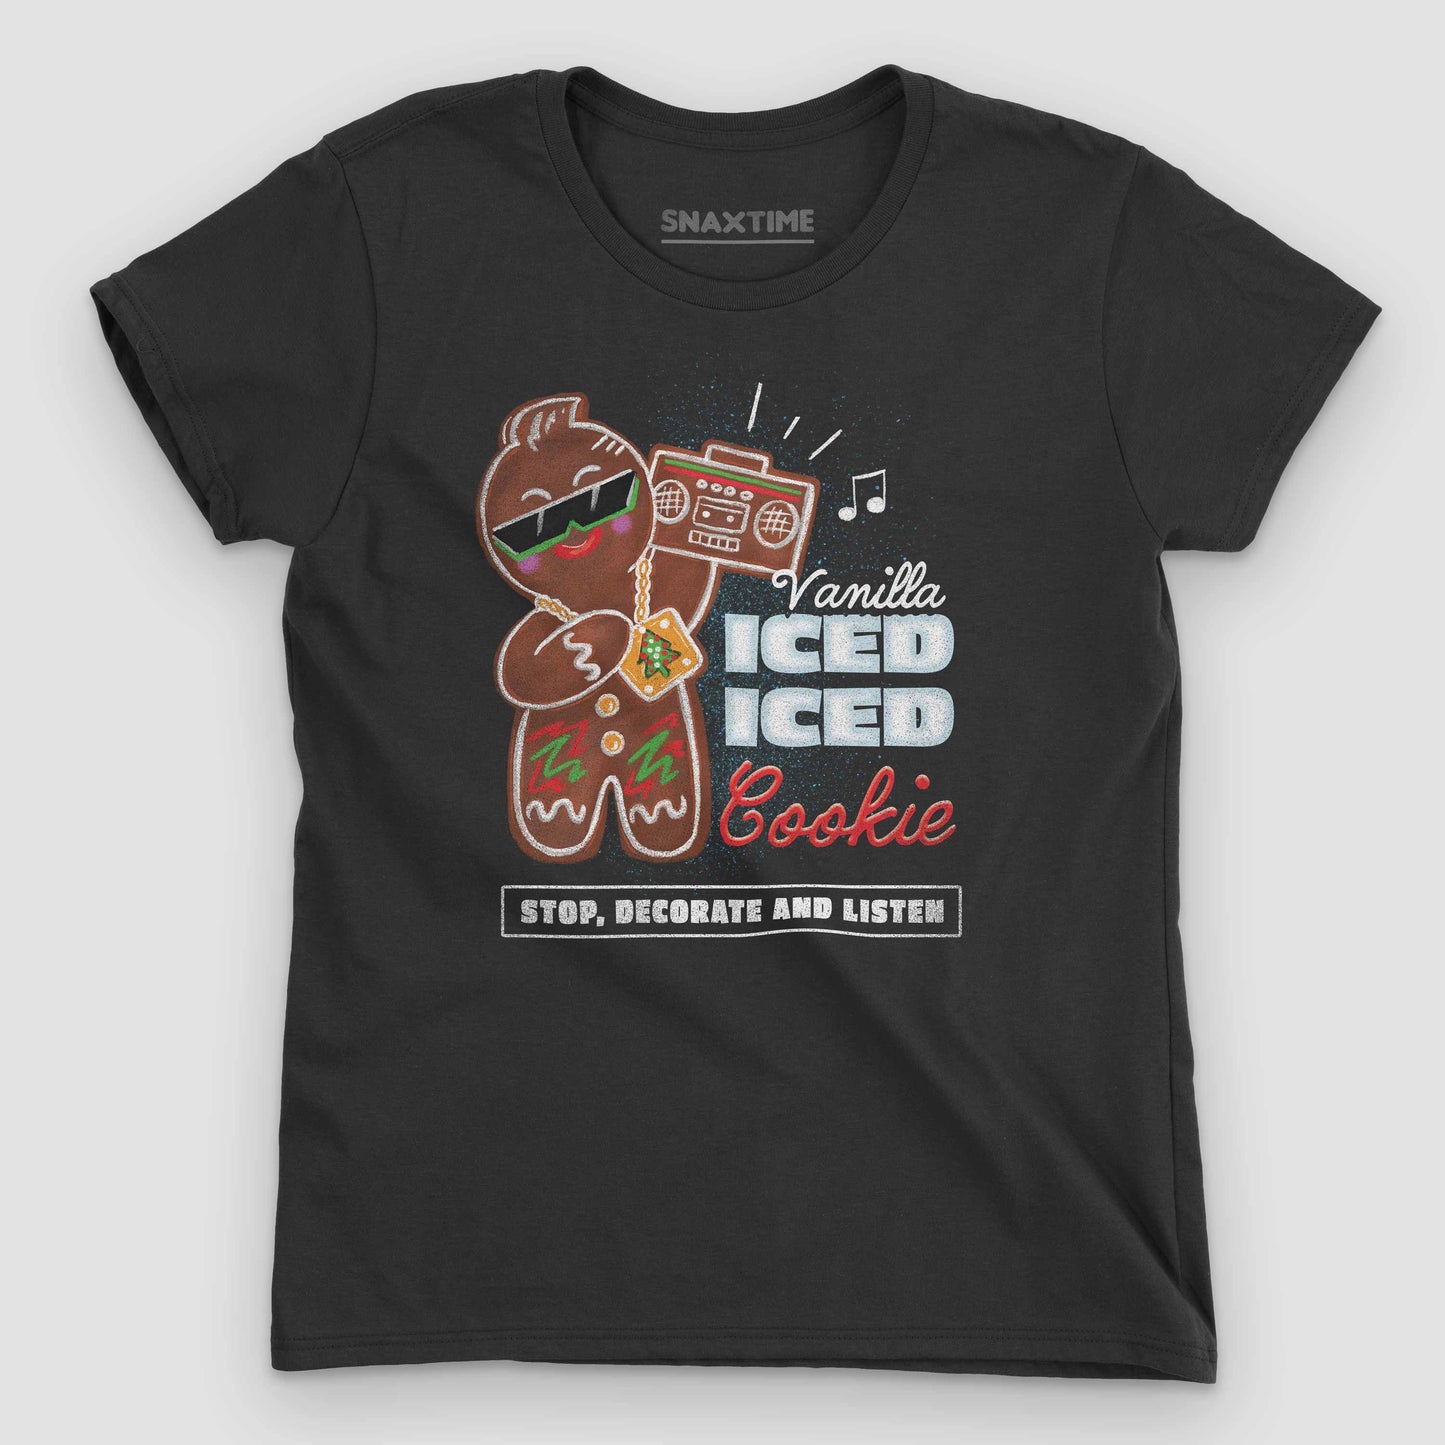 Heather Dark Grey Vanilla Ice-d Gingerbread Cookie Women's Graphic T-Shirt by Snaxtime